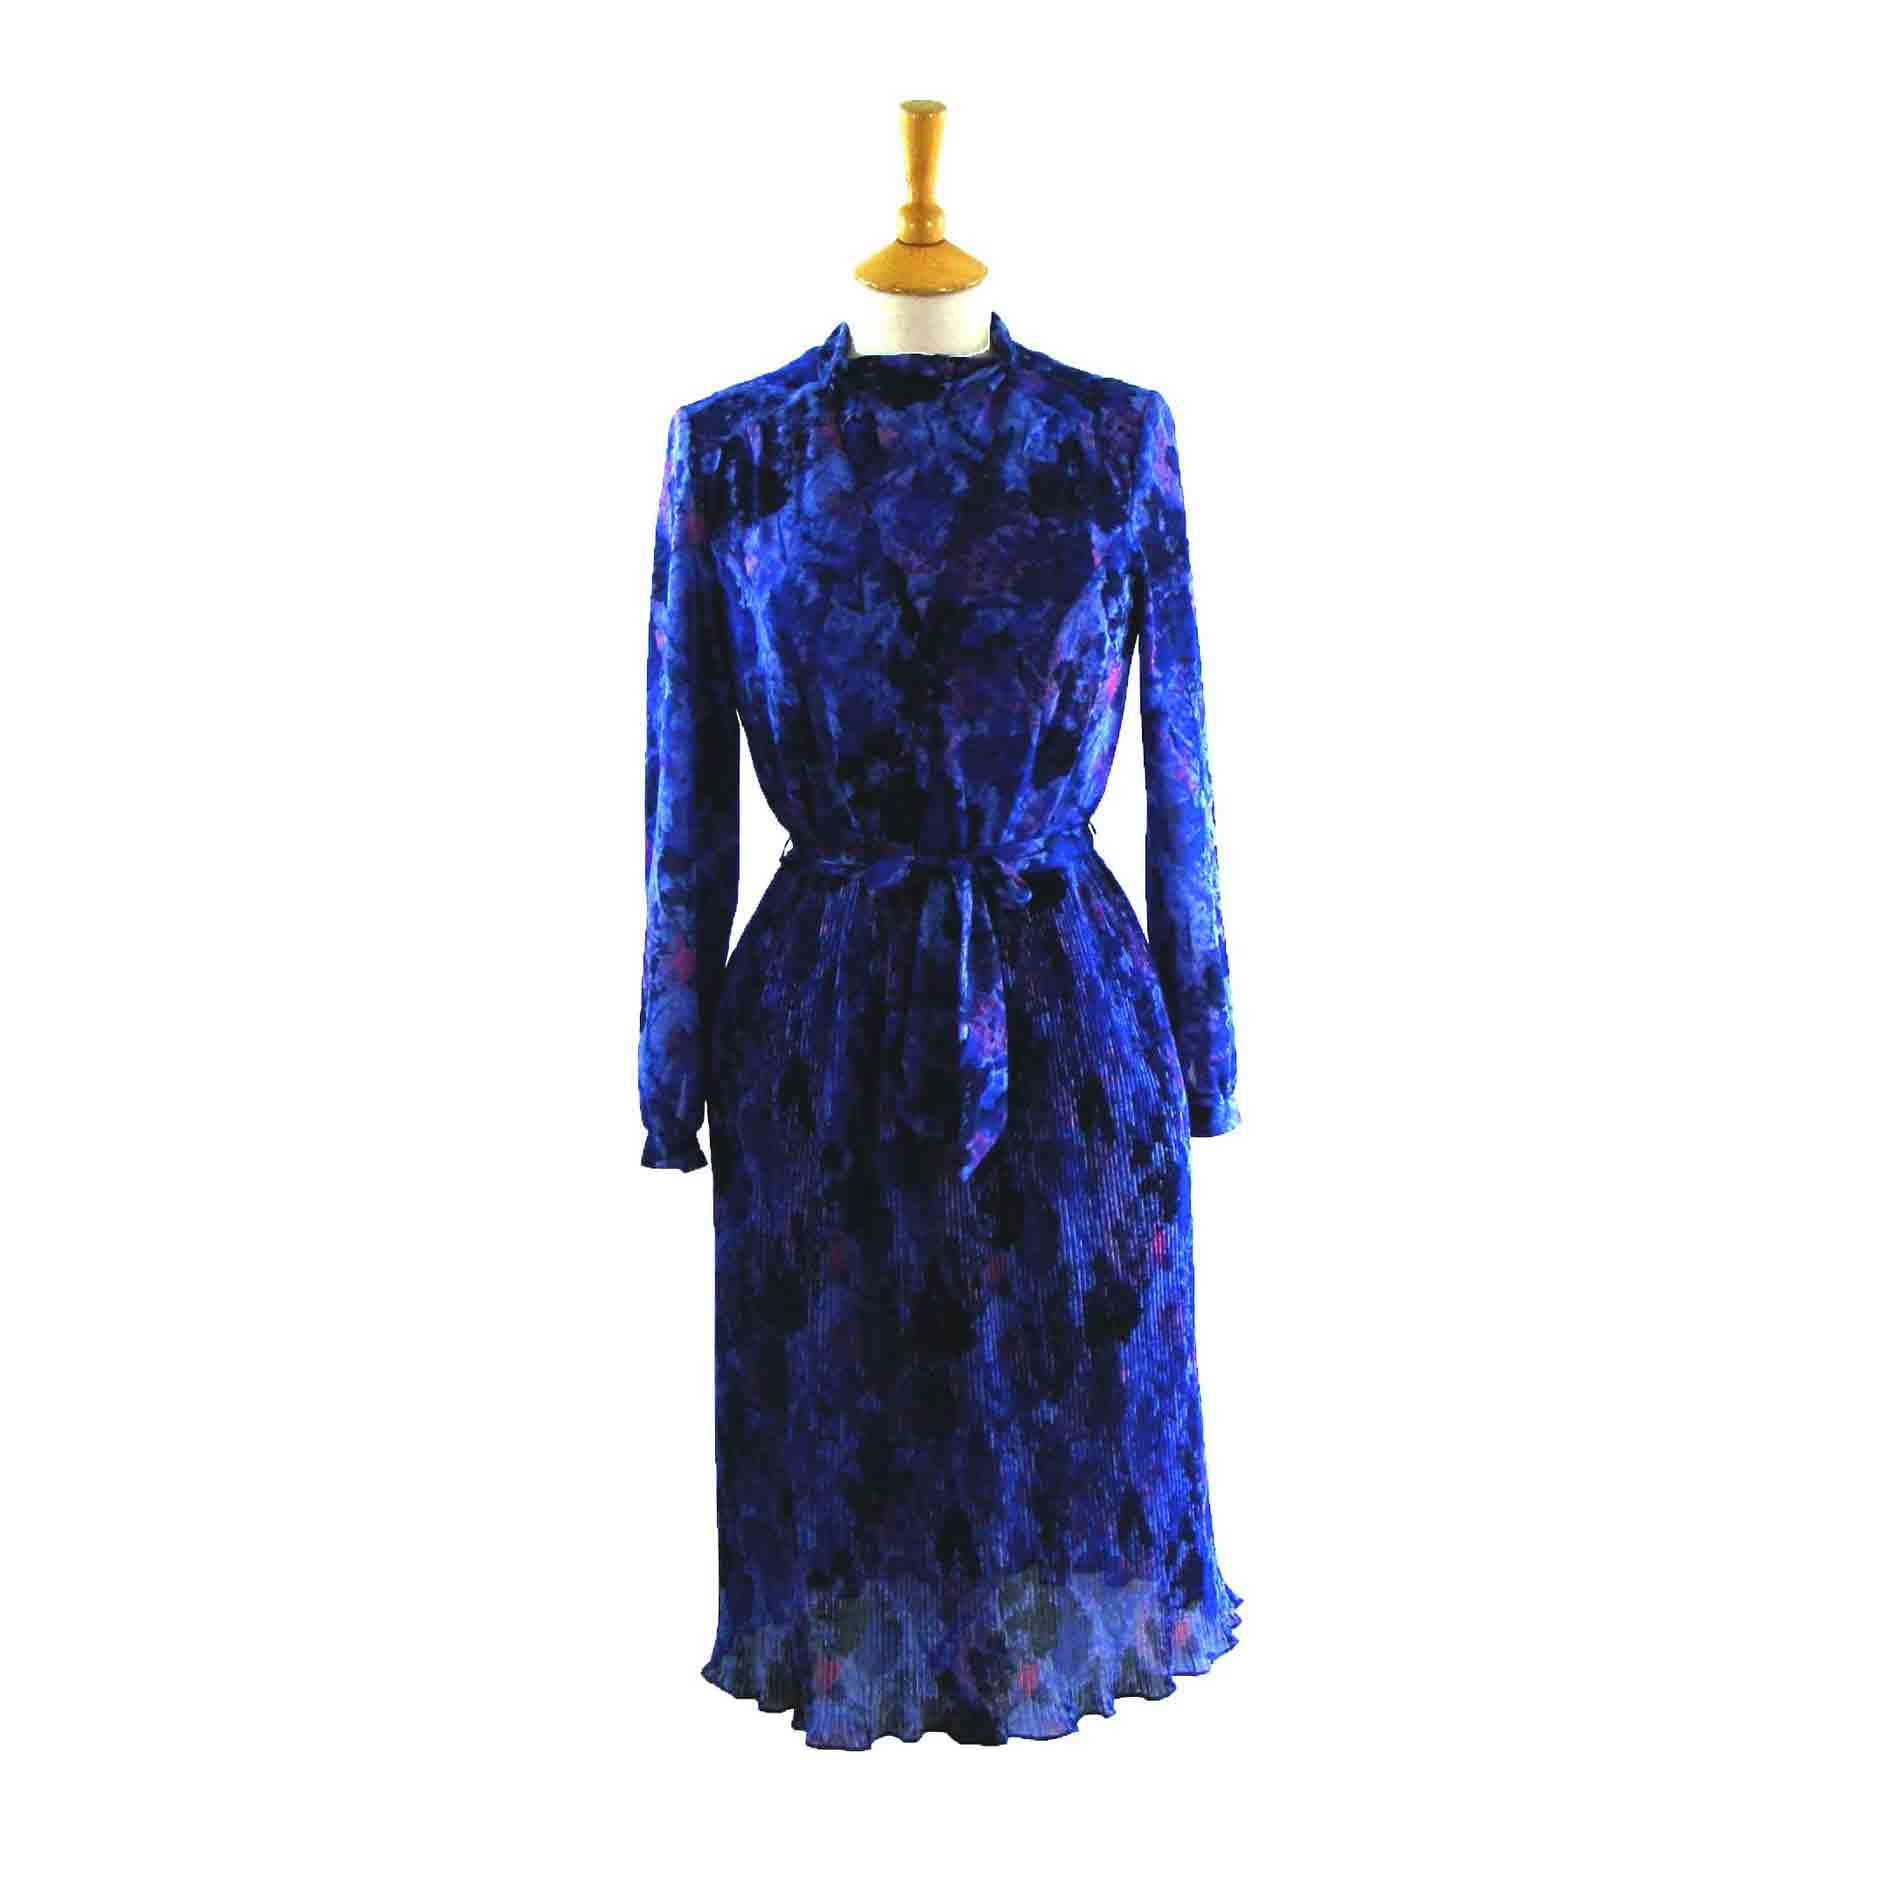 80s Dress, 80s dress style | 80s retro clothing | Blue 17 Vintage Clothing